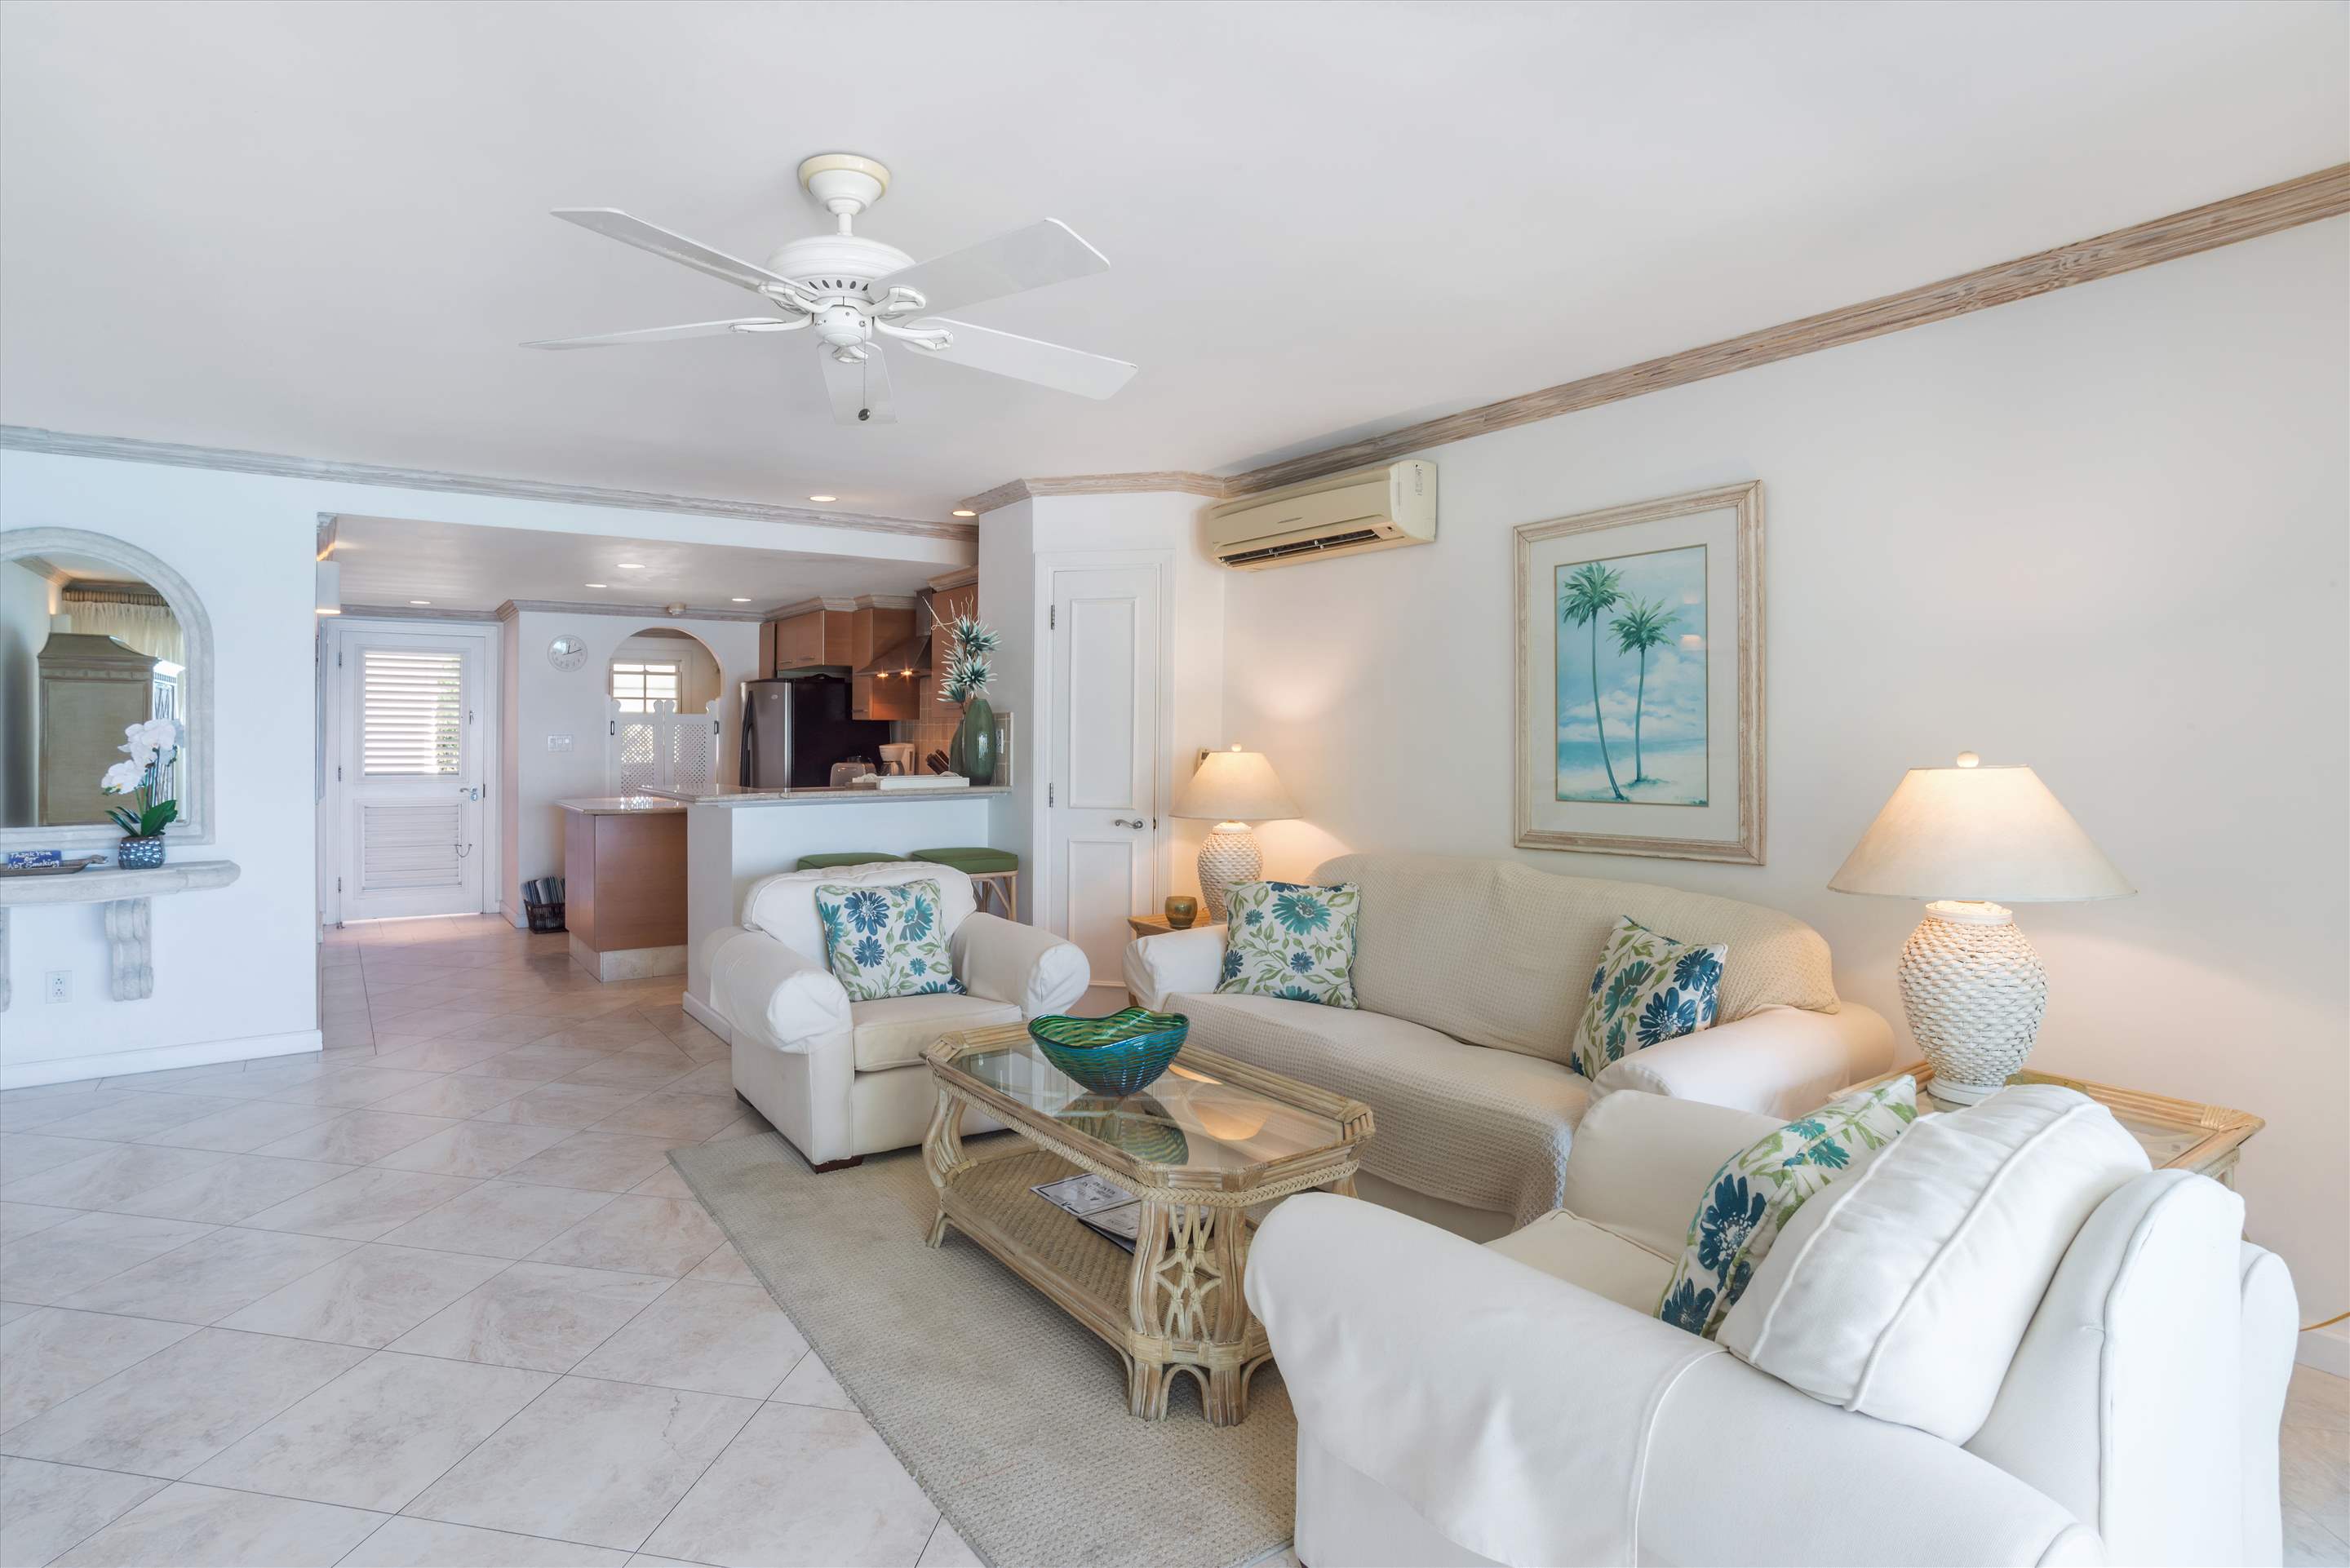 Villas on the Beach 205, 1 bedroom, 1 bedroom apartment in St. James & West Coast, Barbados Photo #6